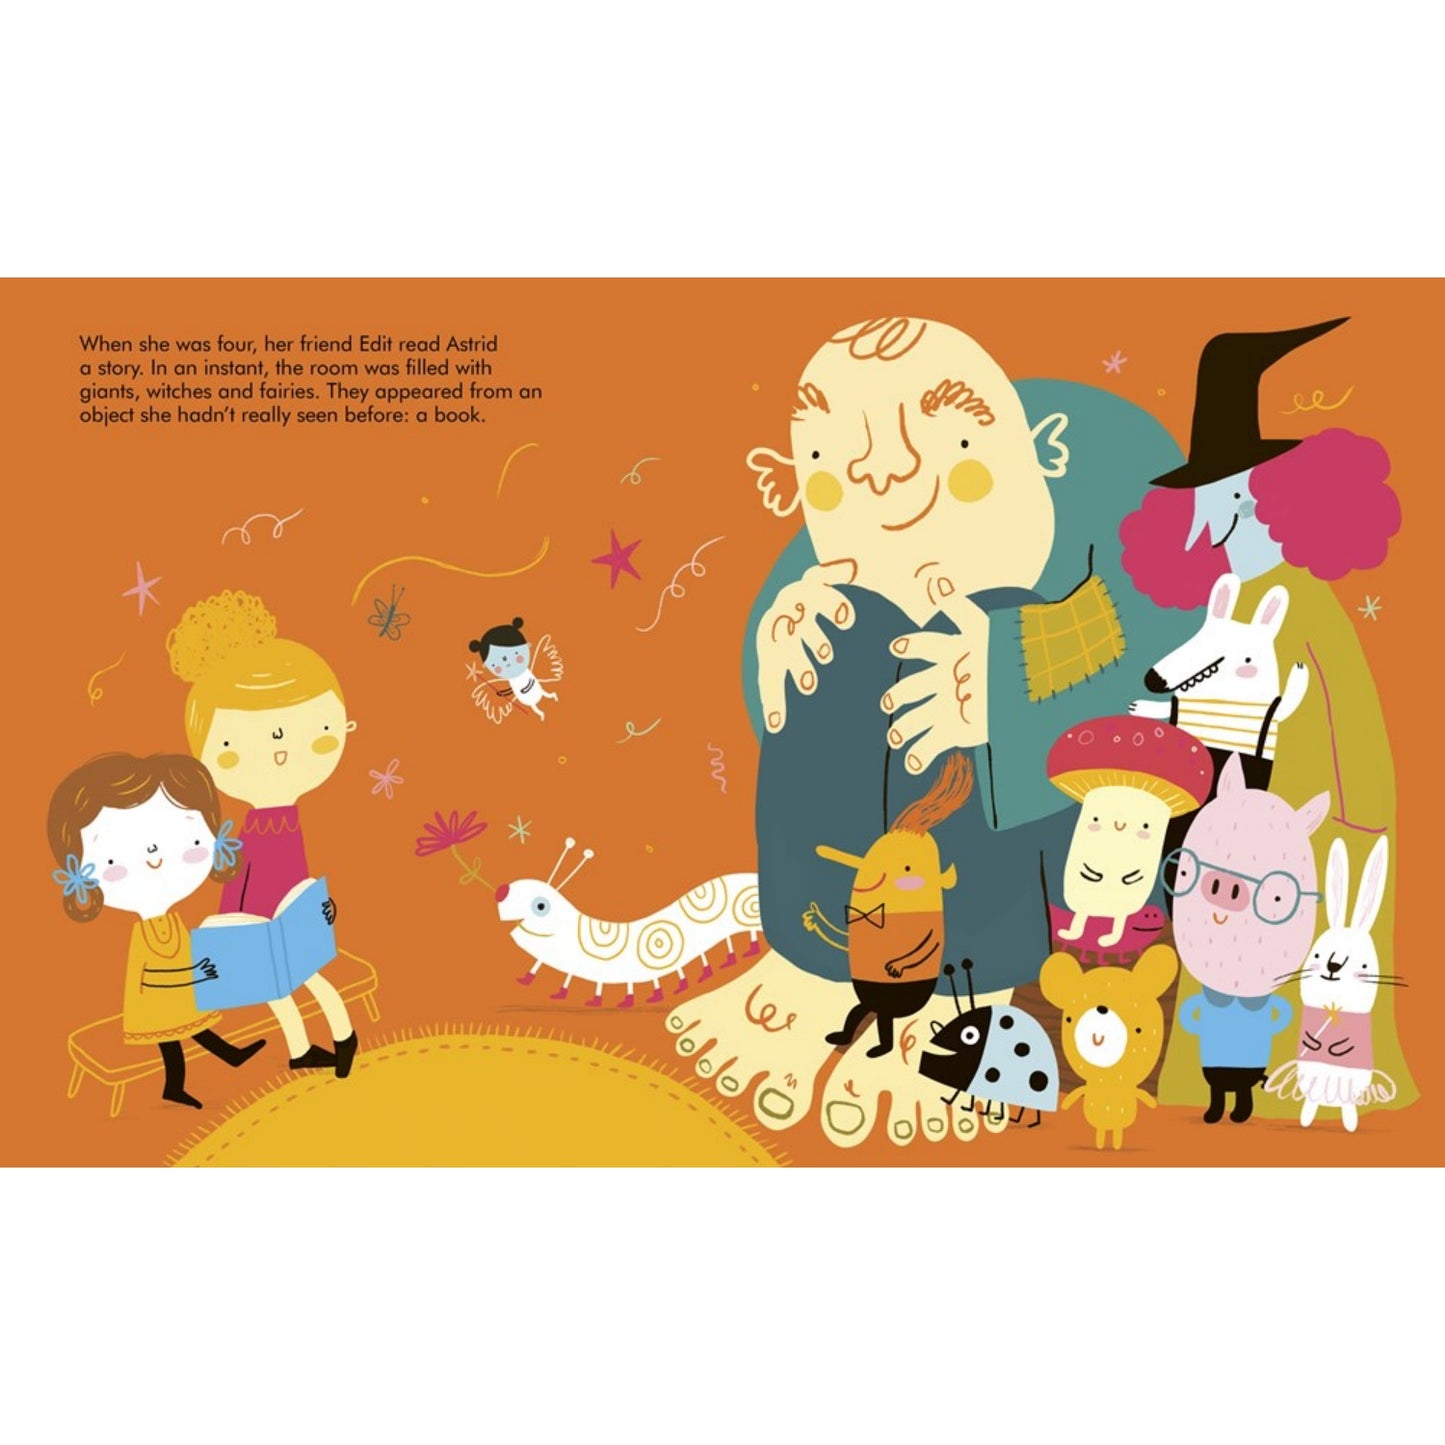 Astrid Lindgren | Little People, BIG DREAMS | Children’s Book on Biographies